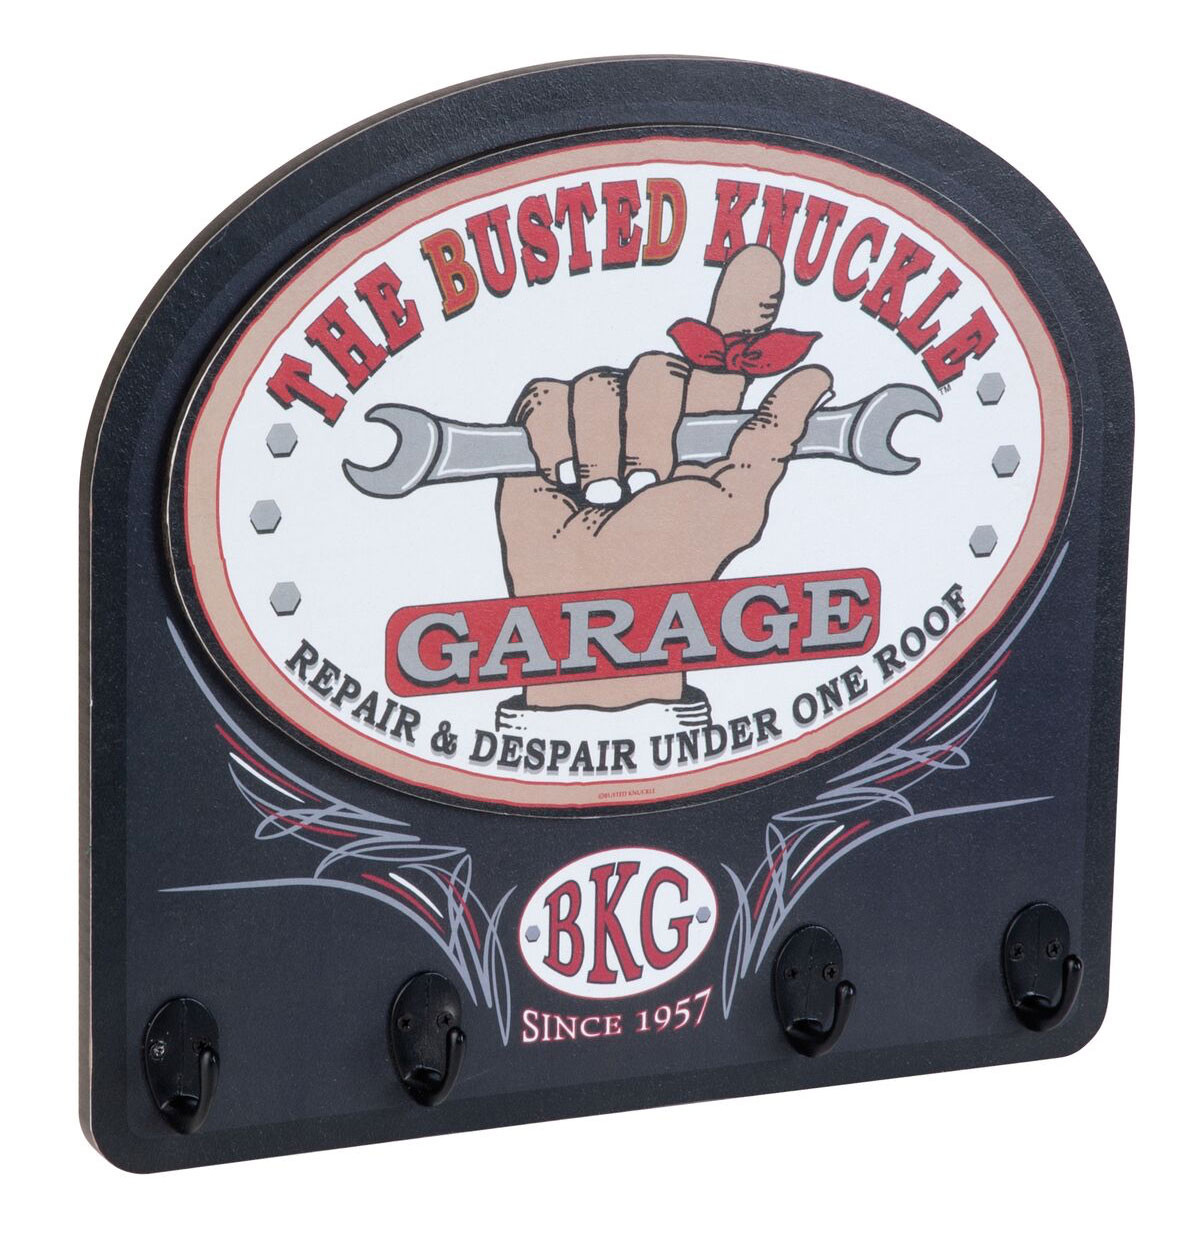 The Busted Knuckle Garage Sleutelrek